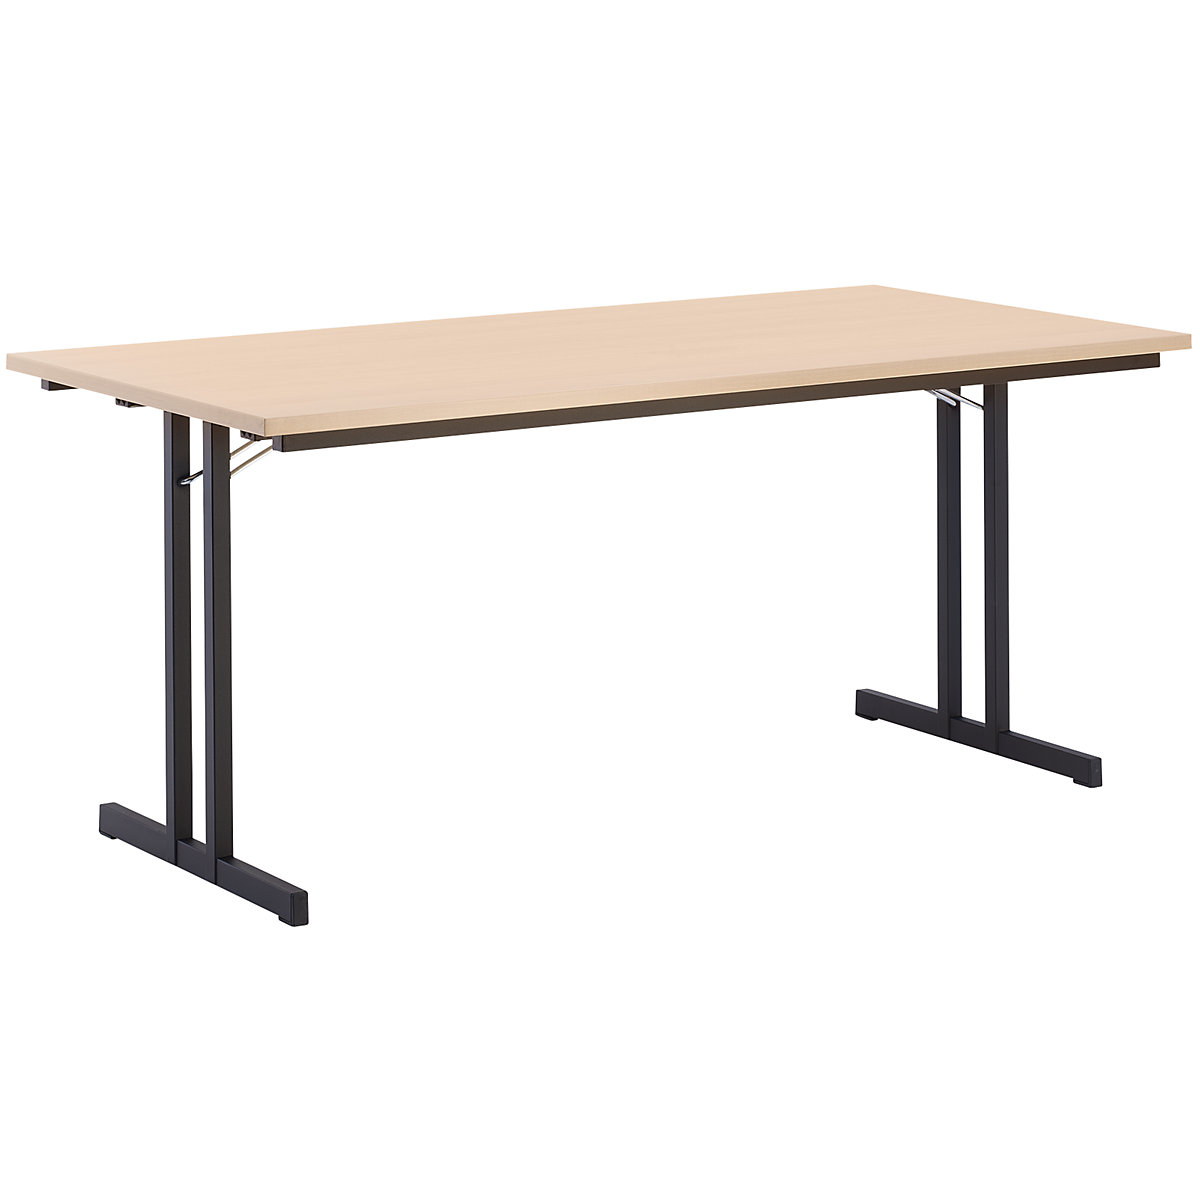 Inklapbare tafel, met extra sterk tafelblad, hoogte 720 mm, 1600 x 700 mm, frame zwart, blad beukenhoutdecor-3